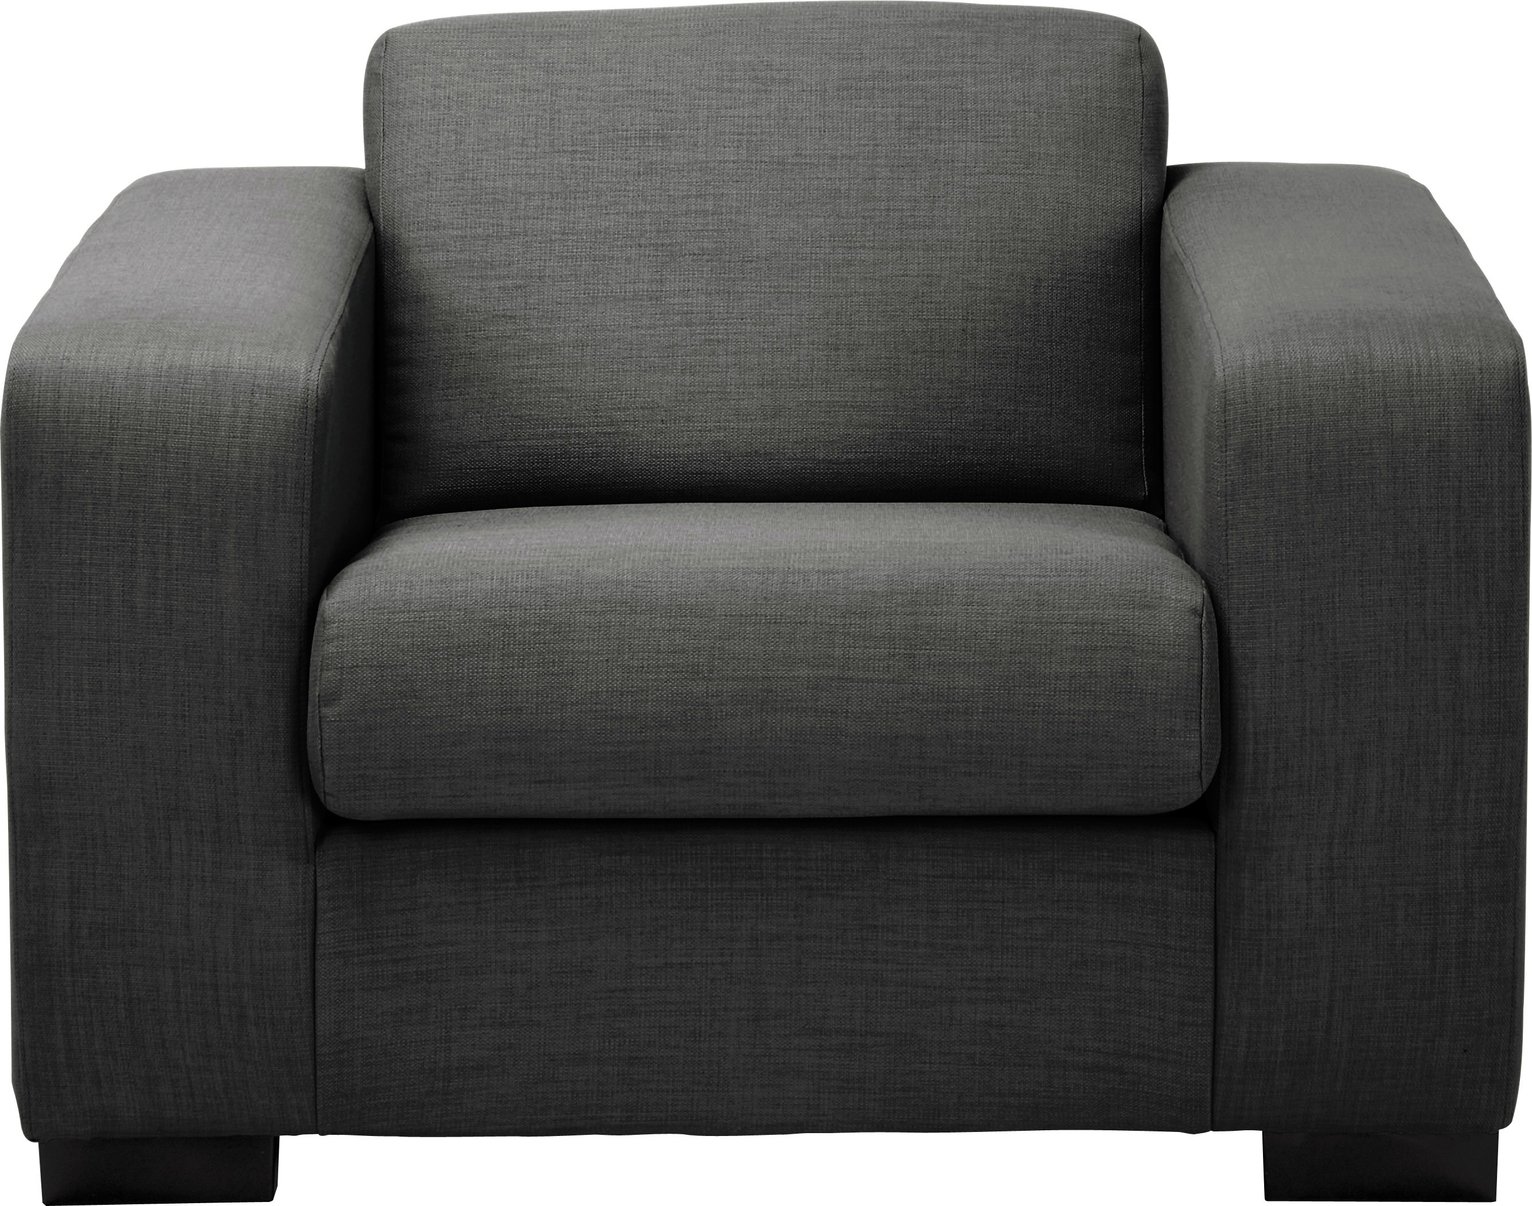 Argos Home New Ava Fabric Armchair - Charcoal (4534558) | Argos Price